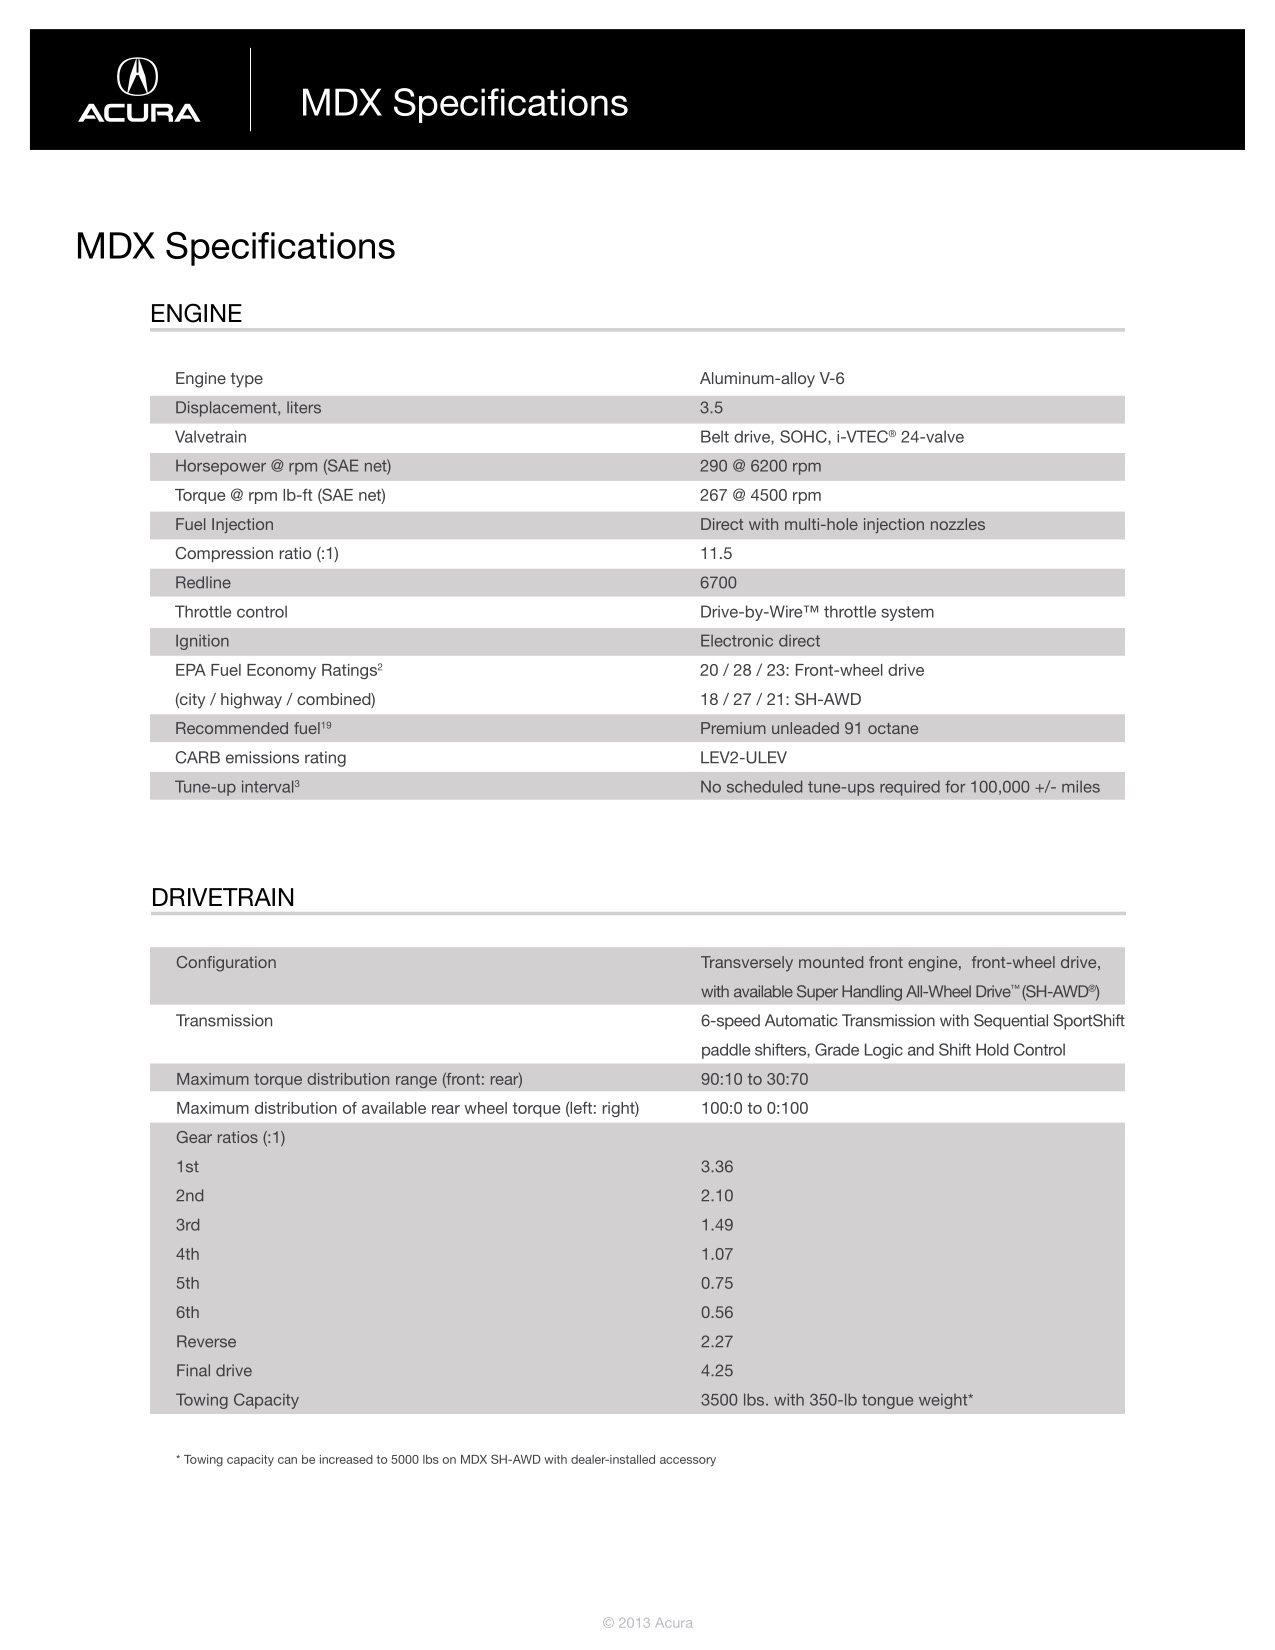 2014 Acura MDX Brochure Page 5